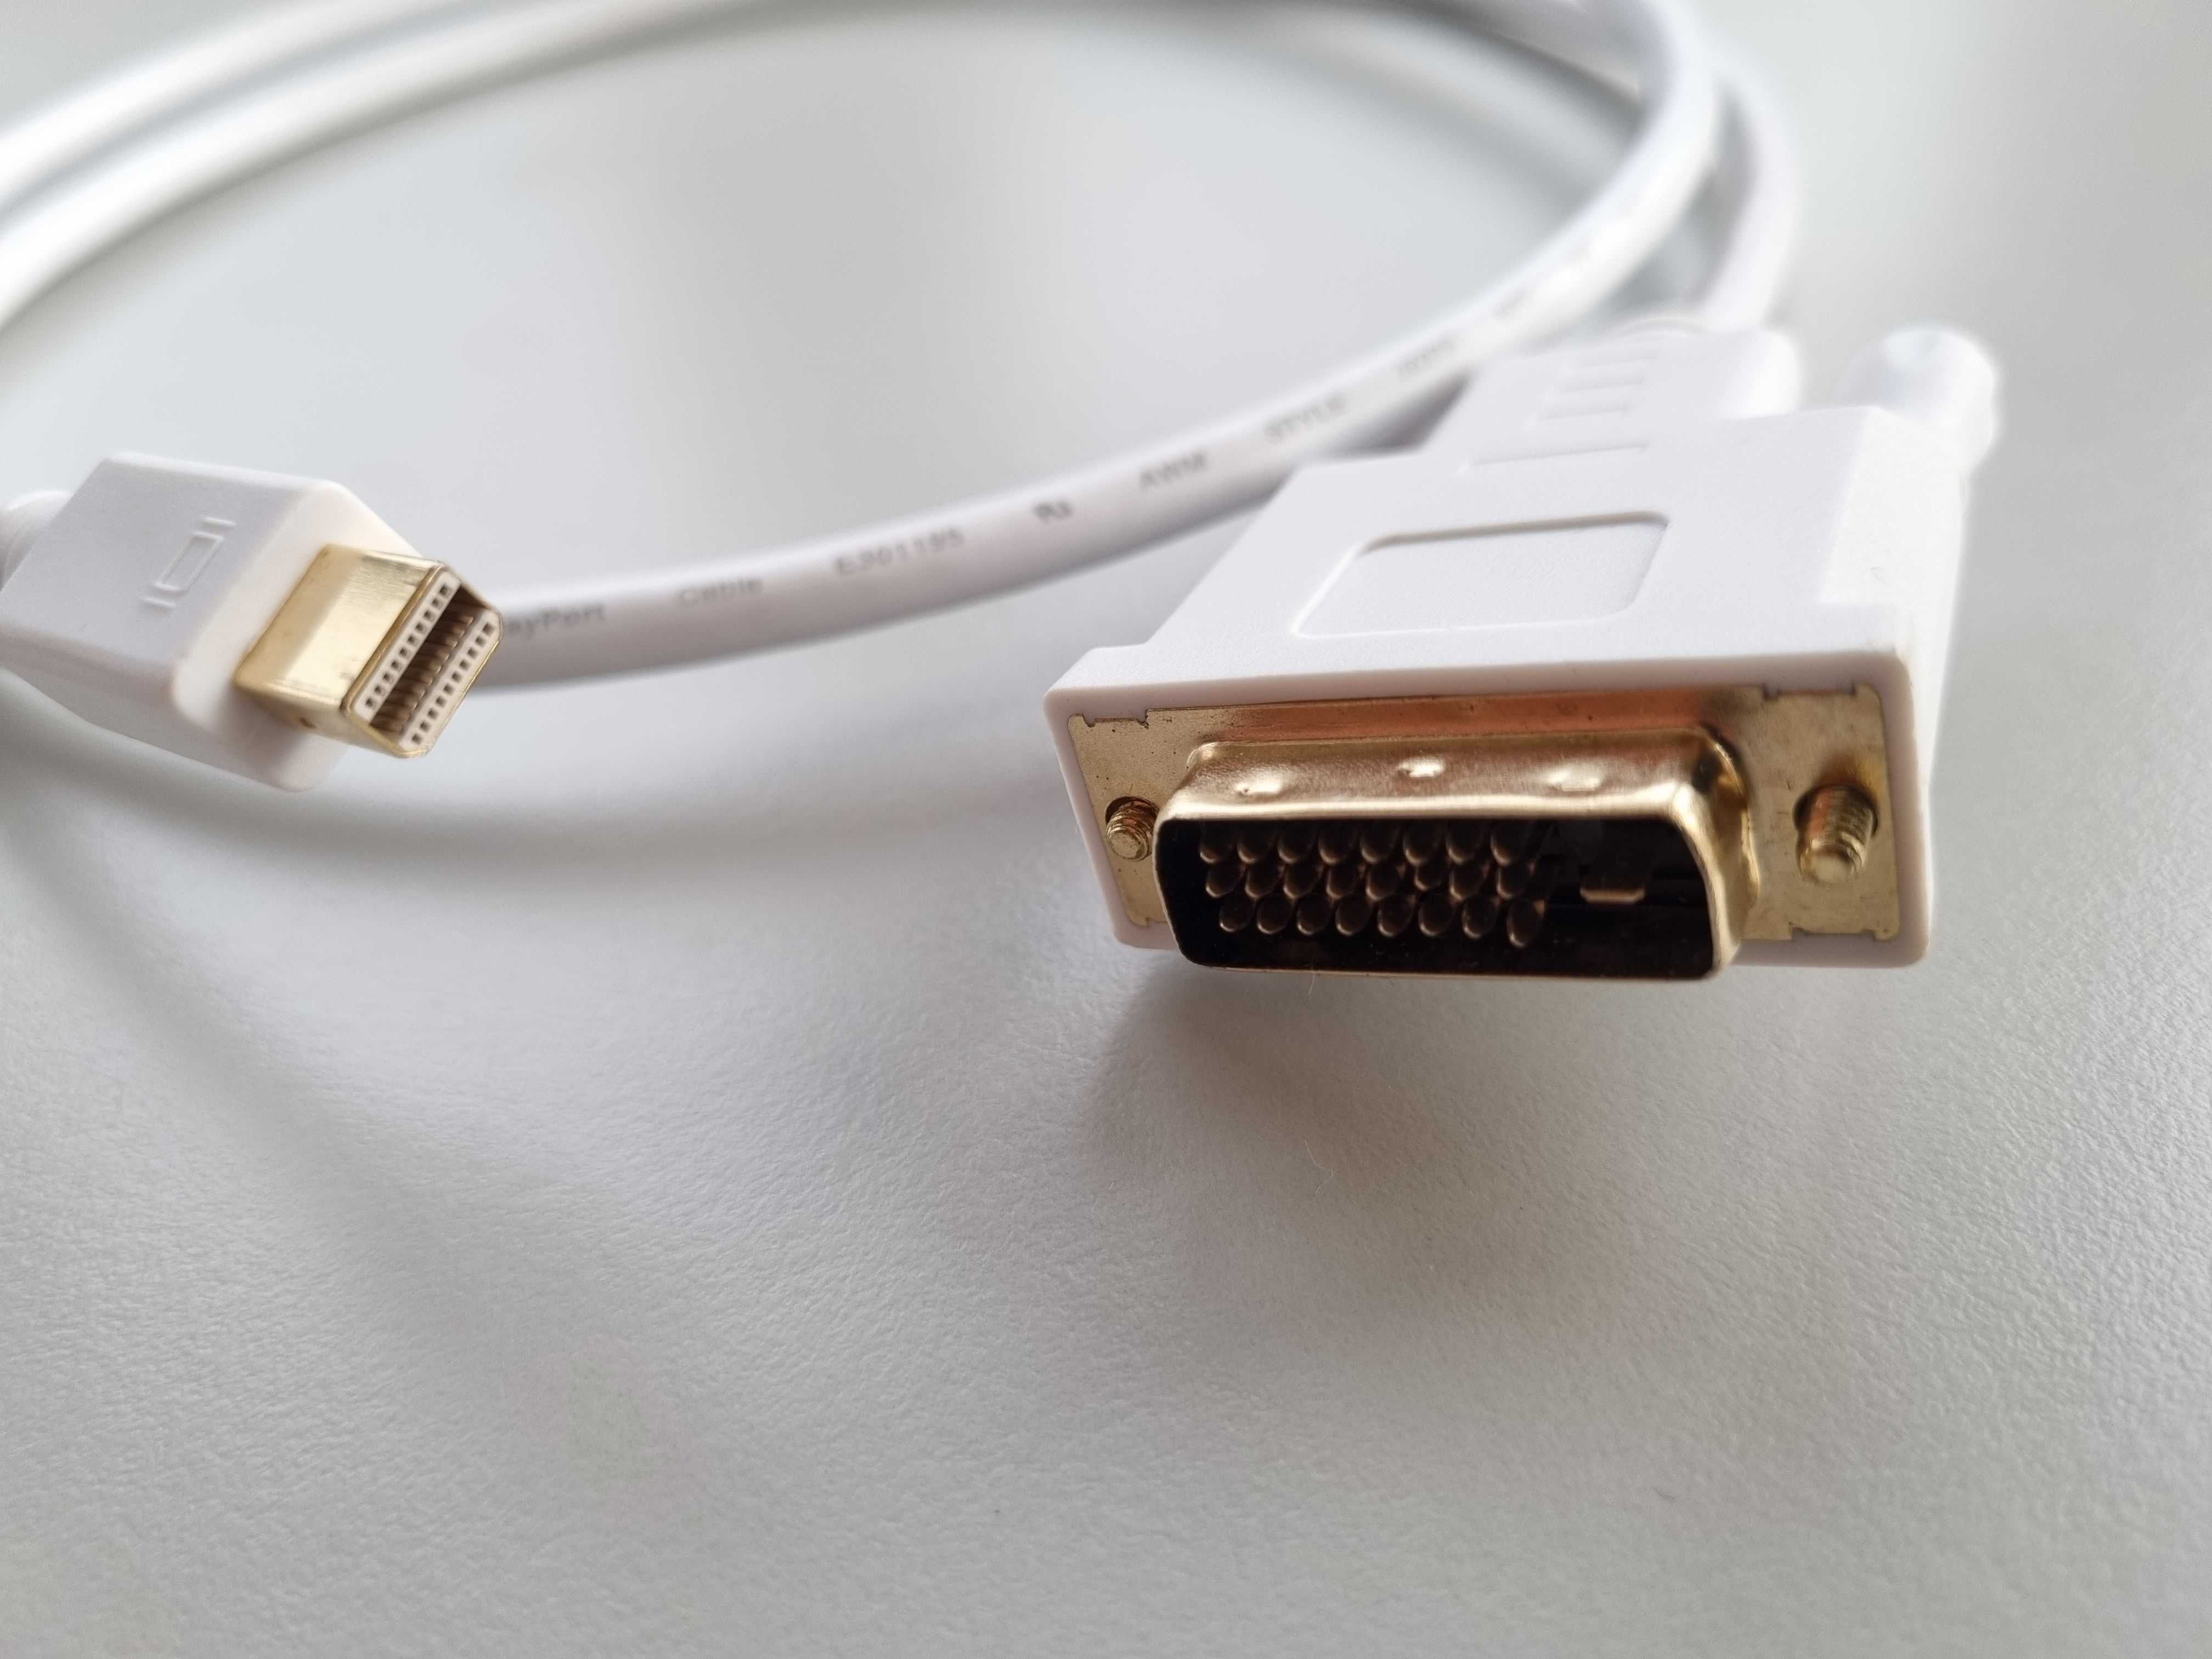 Cablu mini Display Port la DVI si VGA